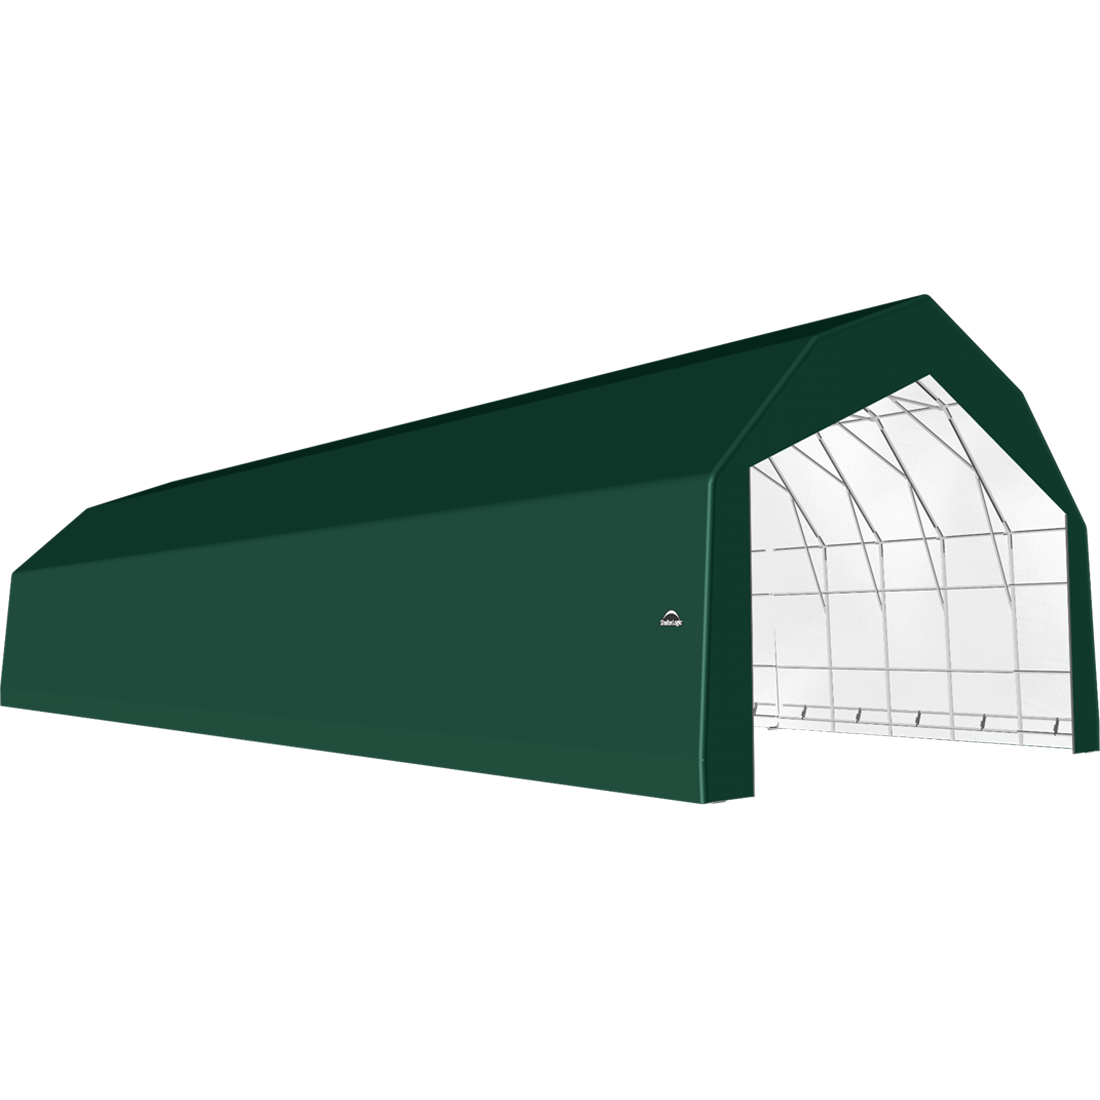 ShelterTech SP Series Barn Shelter, 30 ft. x 80 ft. x 21 ft. Heavy Duty PVC 14.5 oz. Green